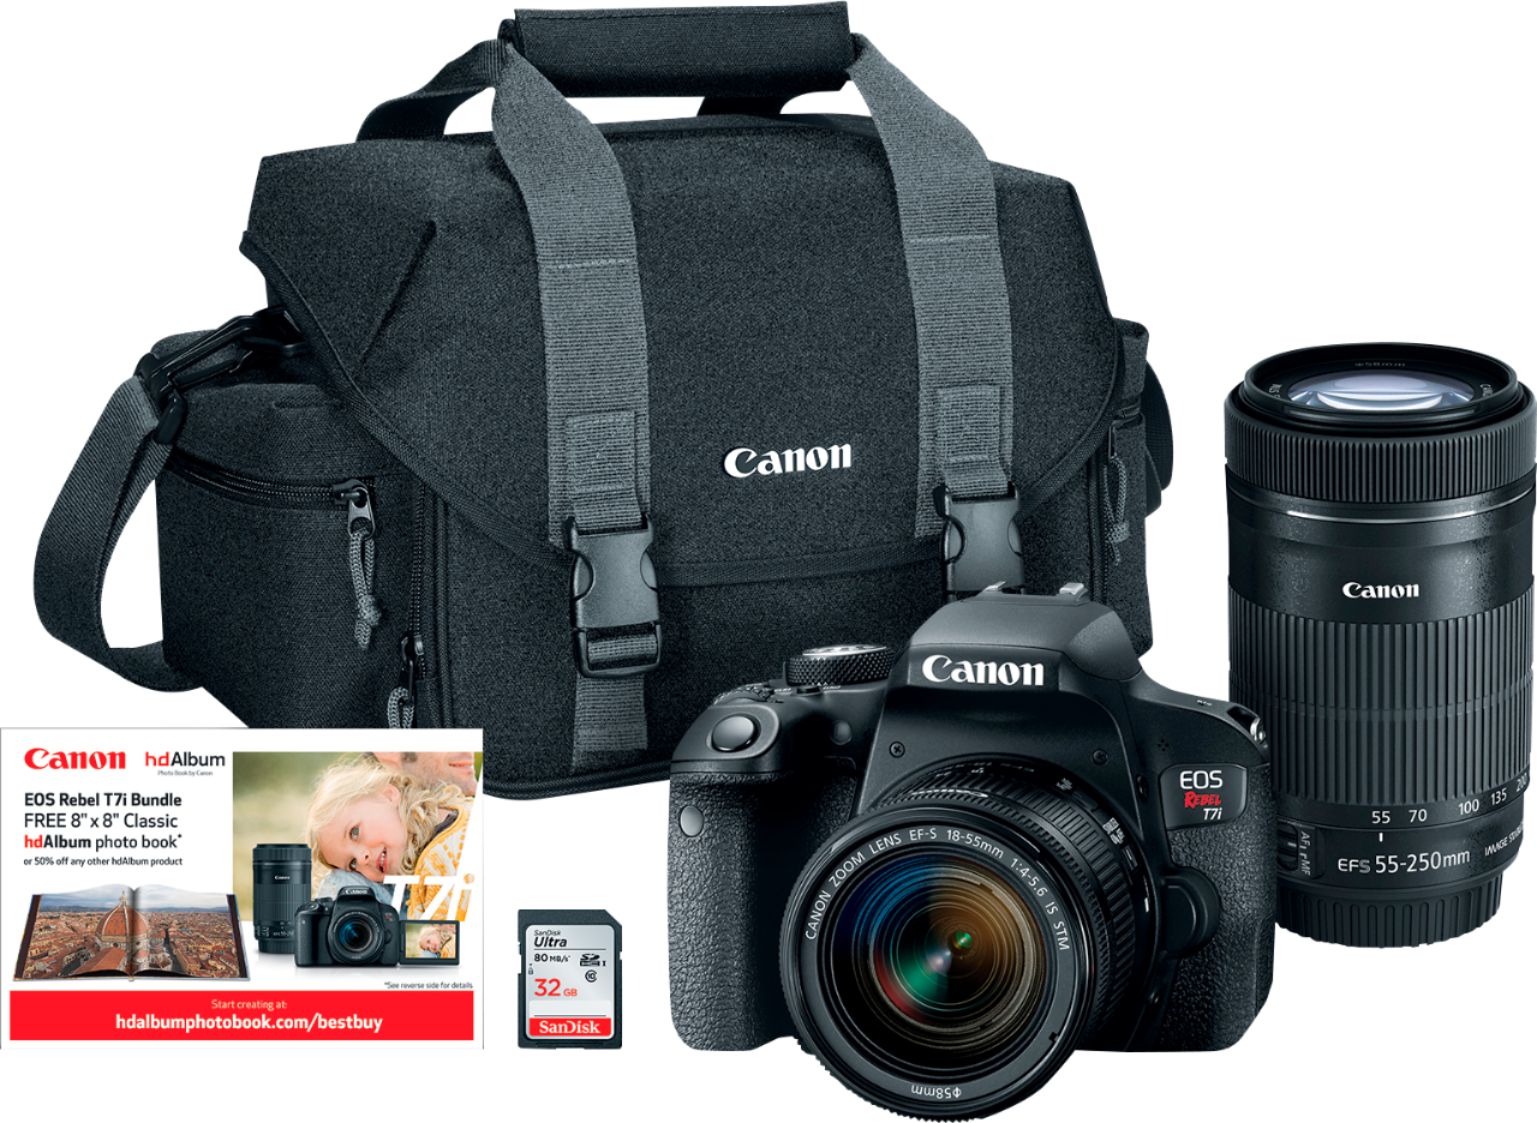 Canon EOS Rebel T7i DSLR Two Lens Kit with 18-55mm - Best Buy